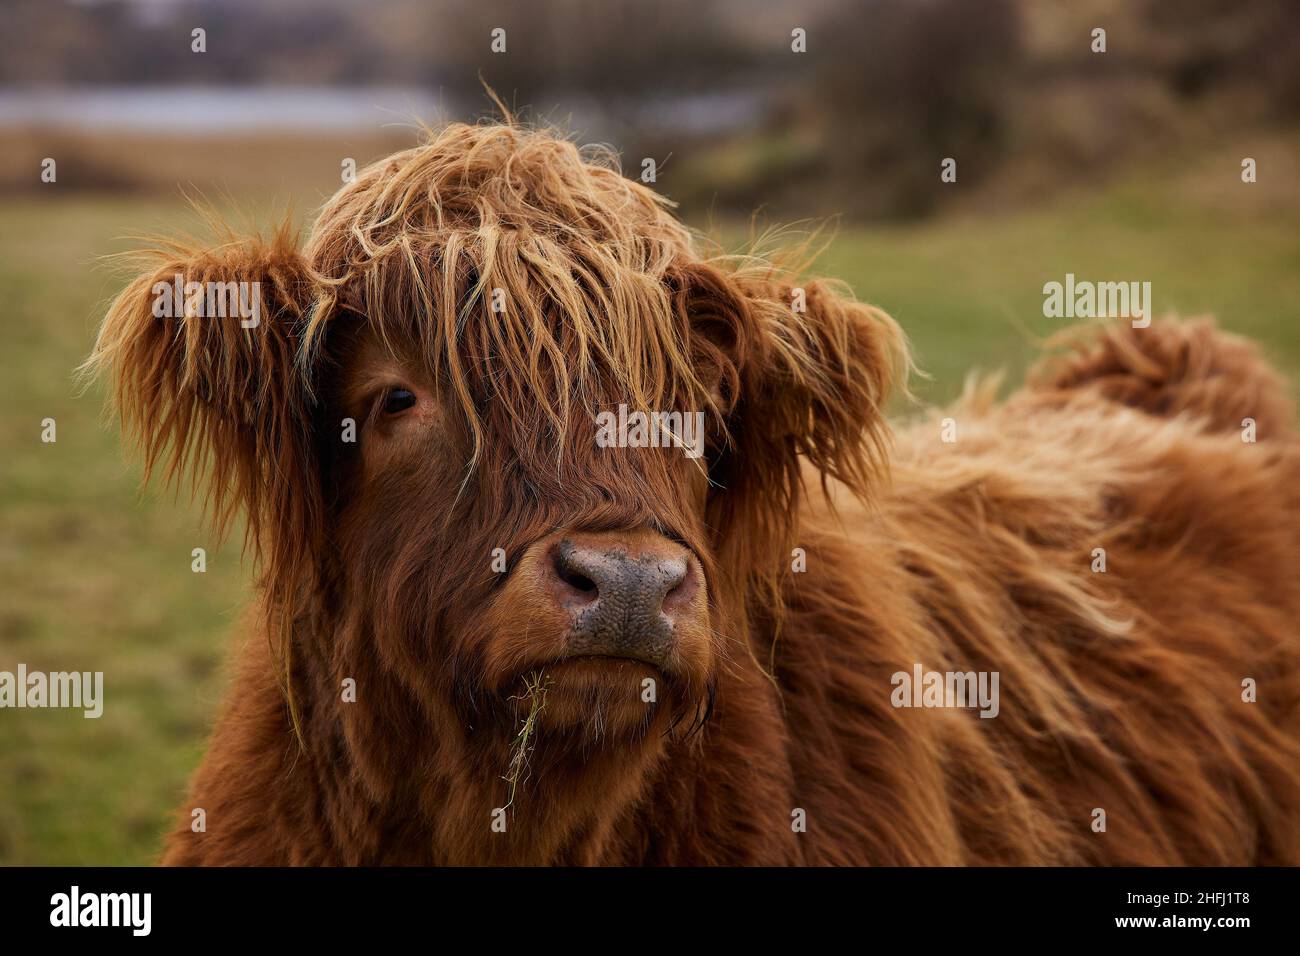 Scottish alpine cow portrait in open field. Ireland, Co. Donegal Stock Photo